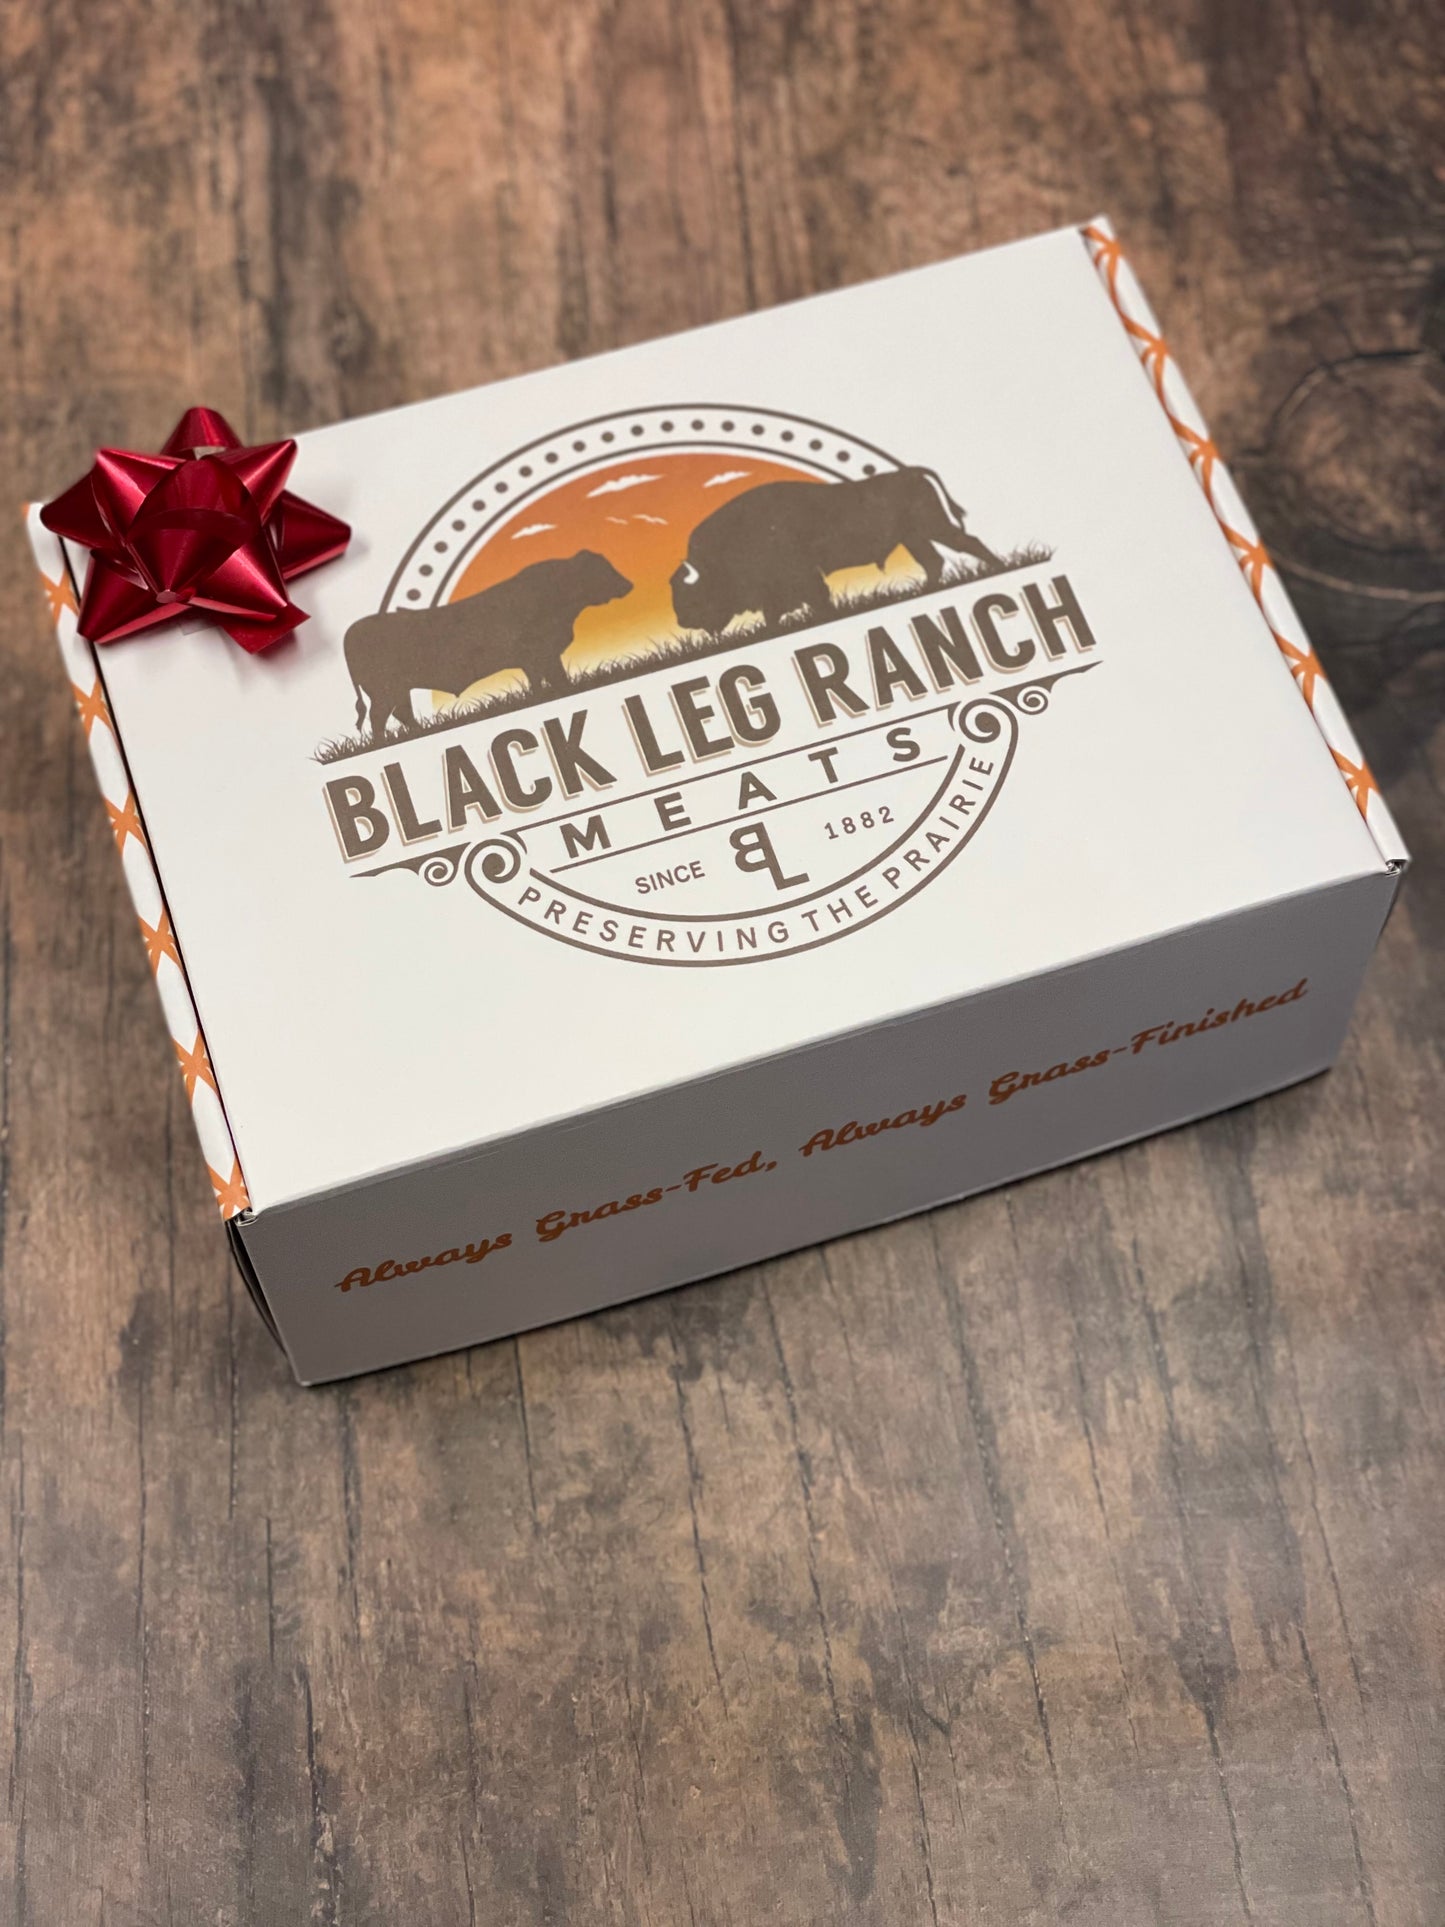 Holiday Black Leg Ranch Meat's Box